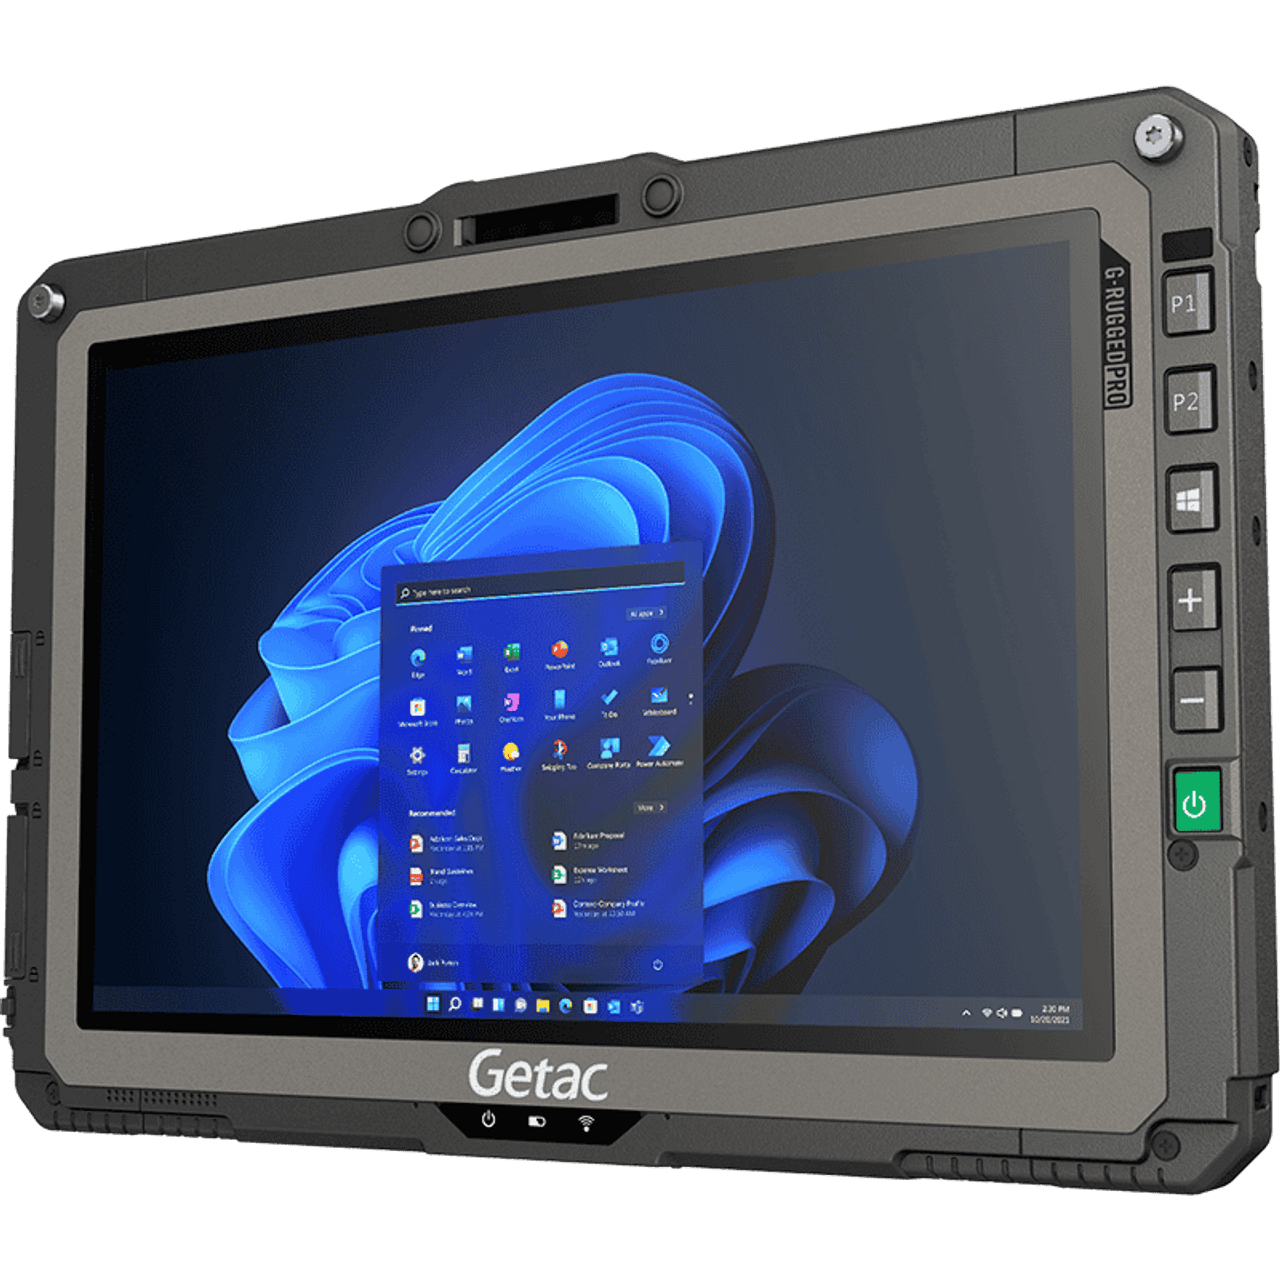 Getac UX10G2-R i5-10210U, Webcam + Tablet Hard Handle, W 10 Pro x64 8GB RAM, 256GB PCIe SSD, SR HD LCD + Touchscreen stylus + Rear Camera, US Power Cord, WIFI + BT, Bridge Battery, 33yb2b